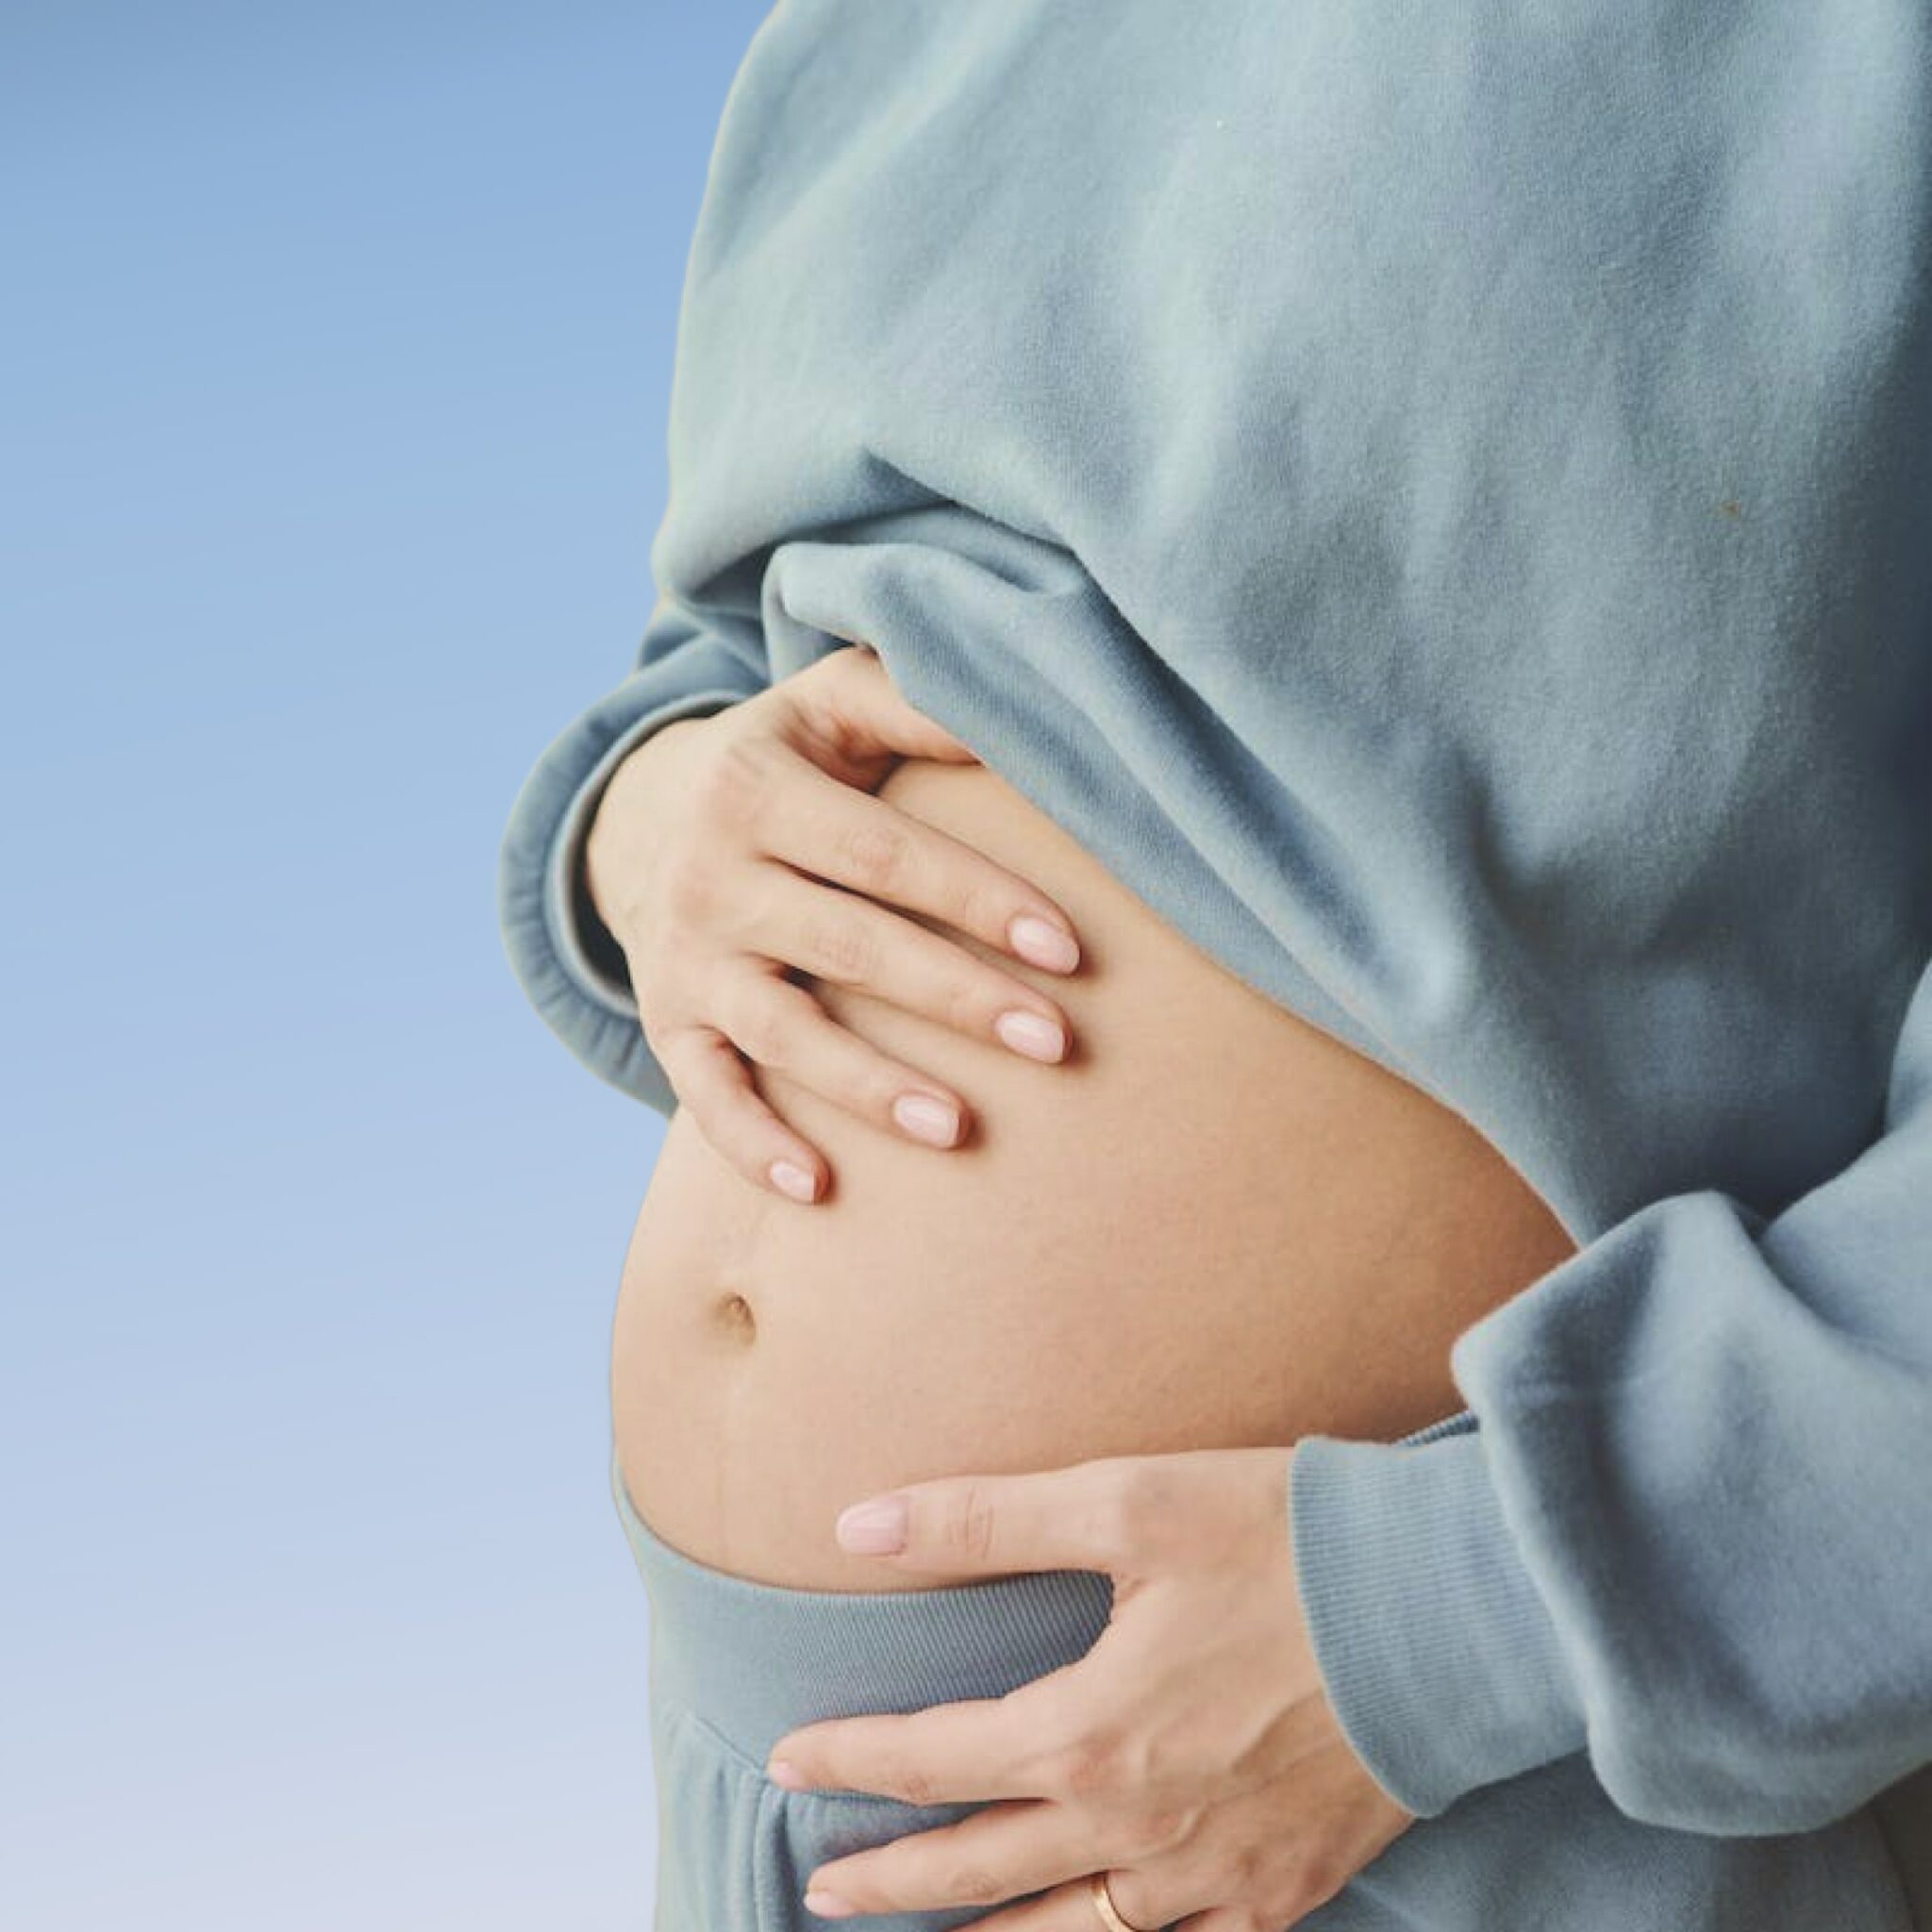 Pregnancy Pilates